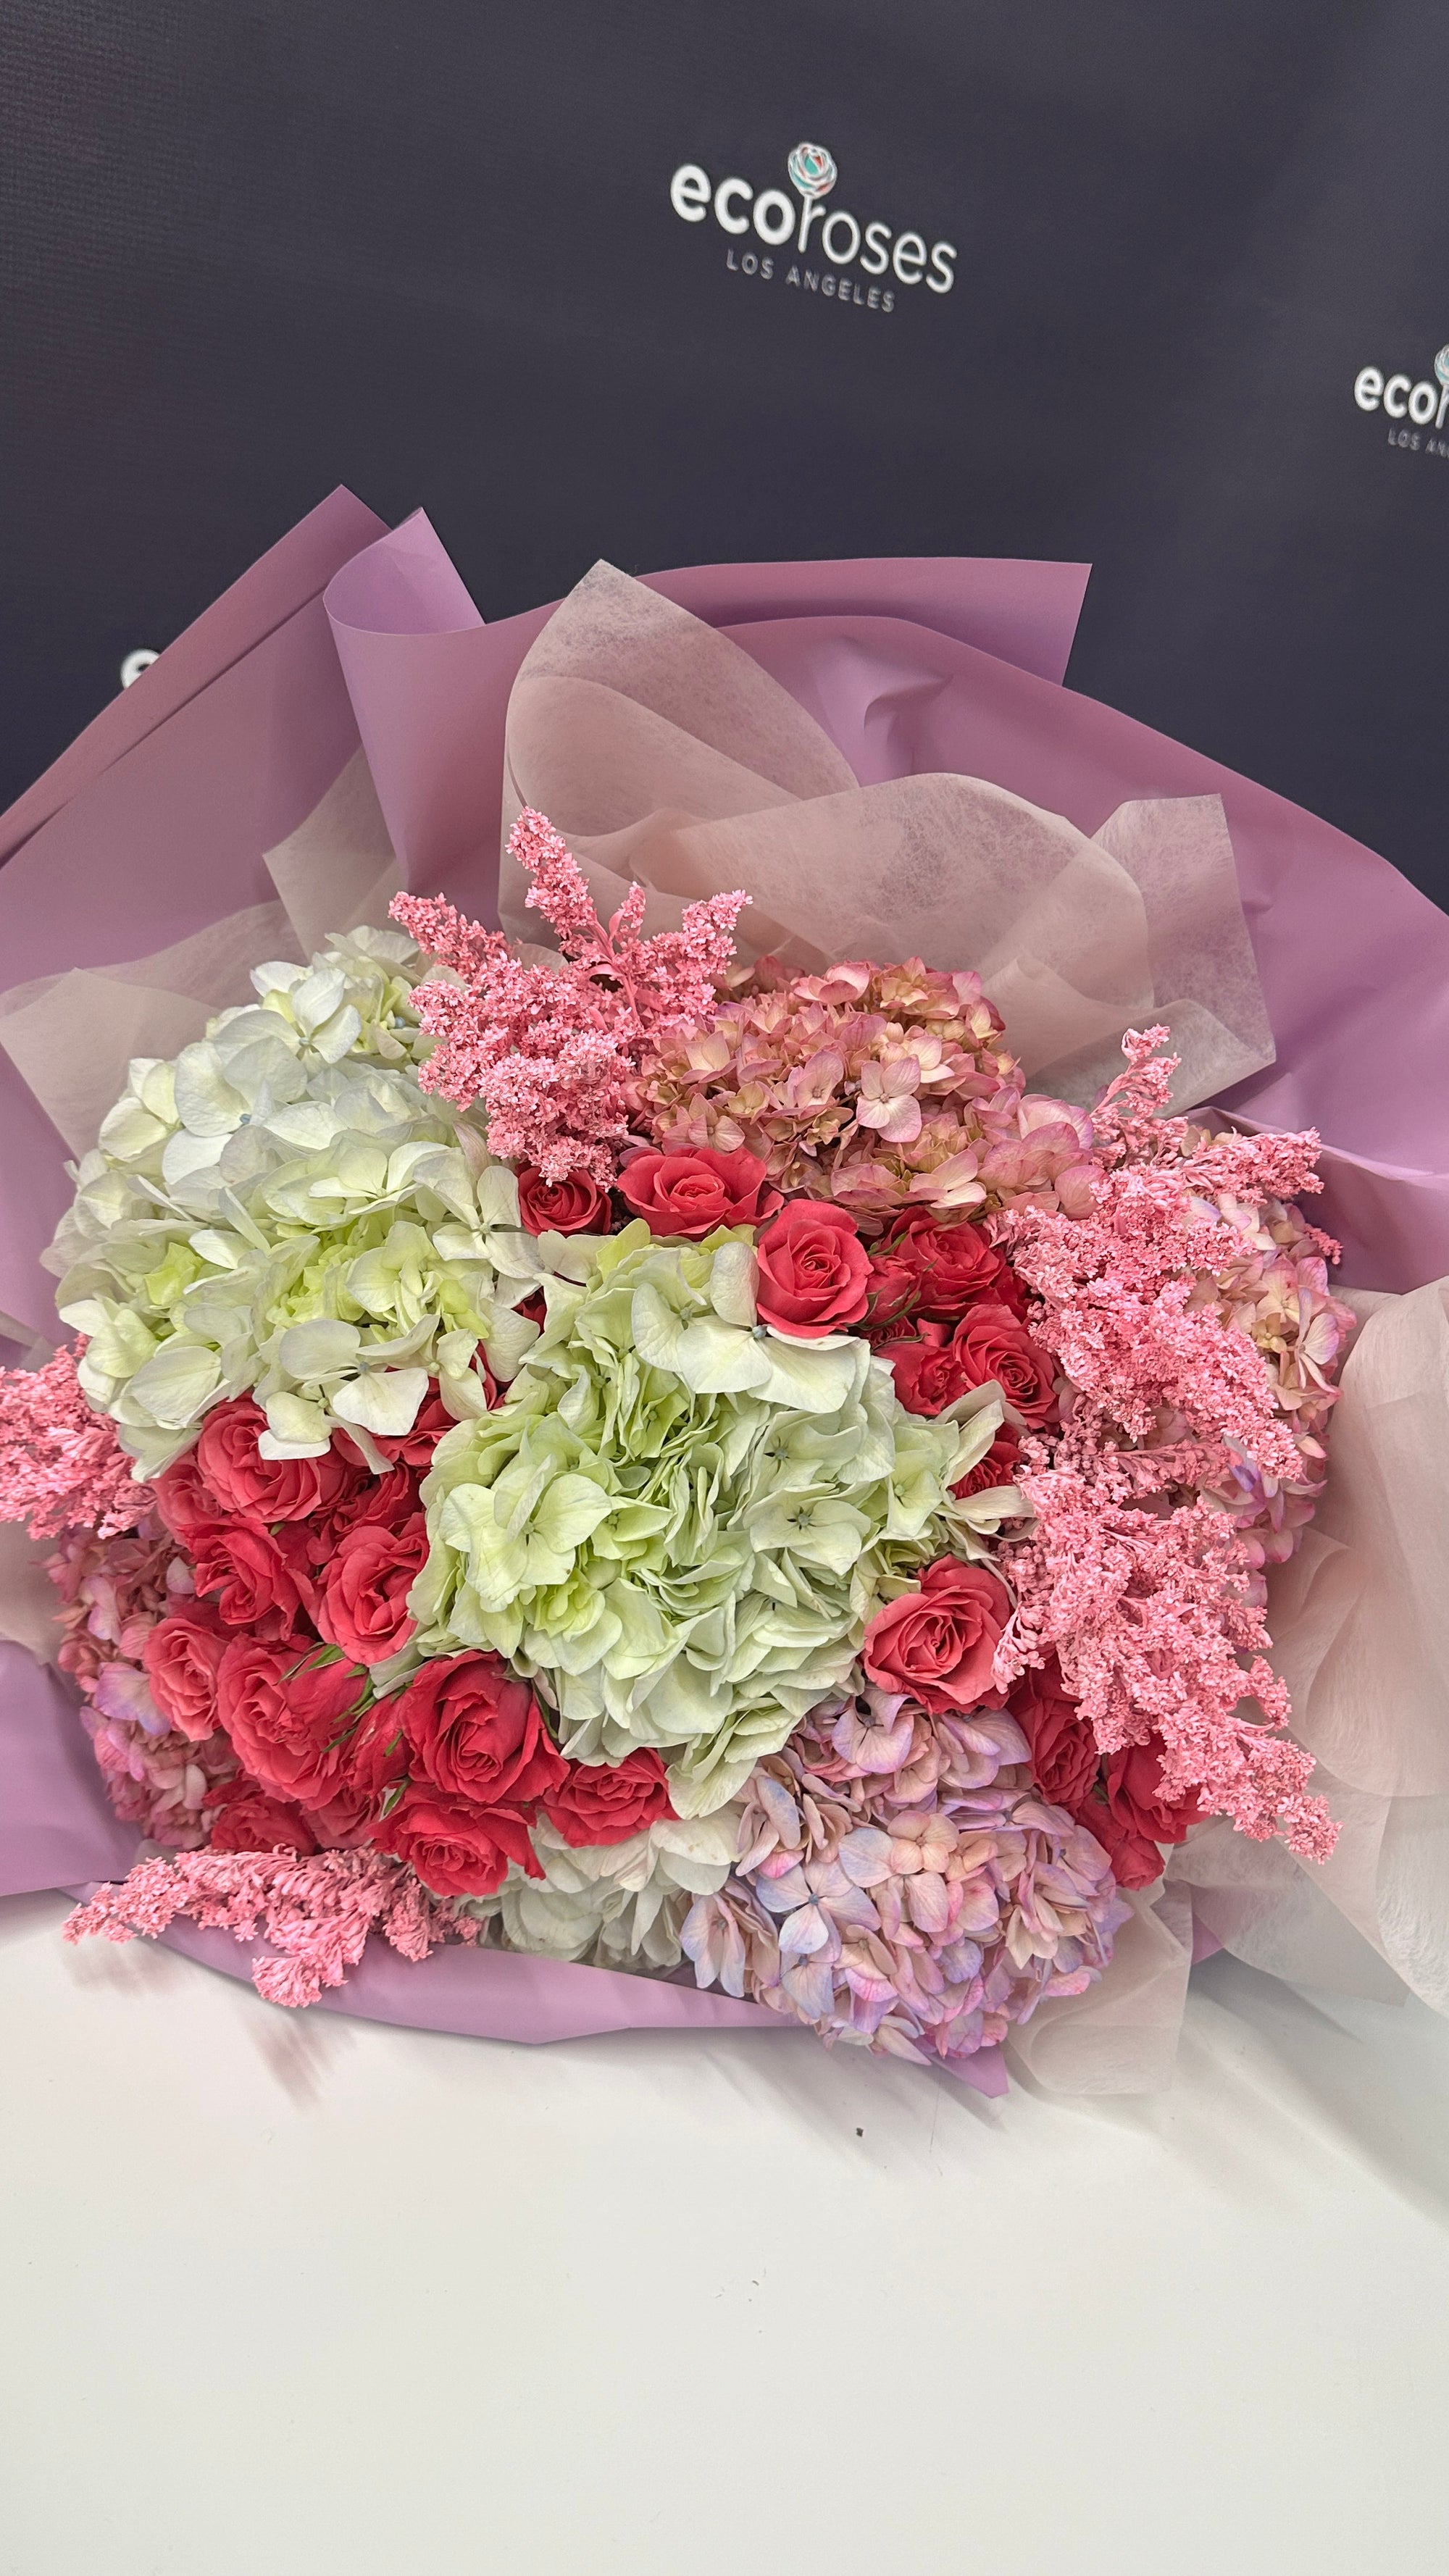 Flower Shops In Glendale - Hydrangea Love bouquet deluxe arrangement features stunning spray roses and hydrangeas